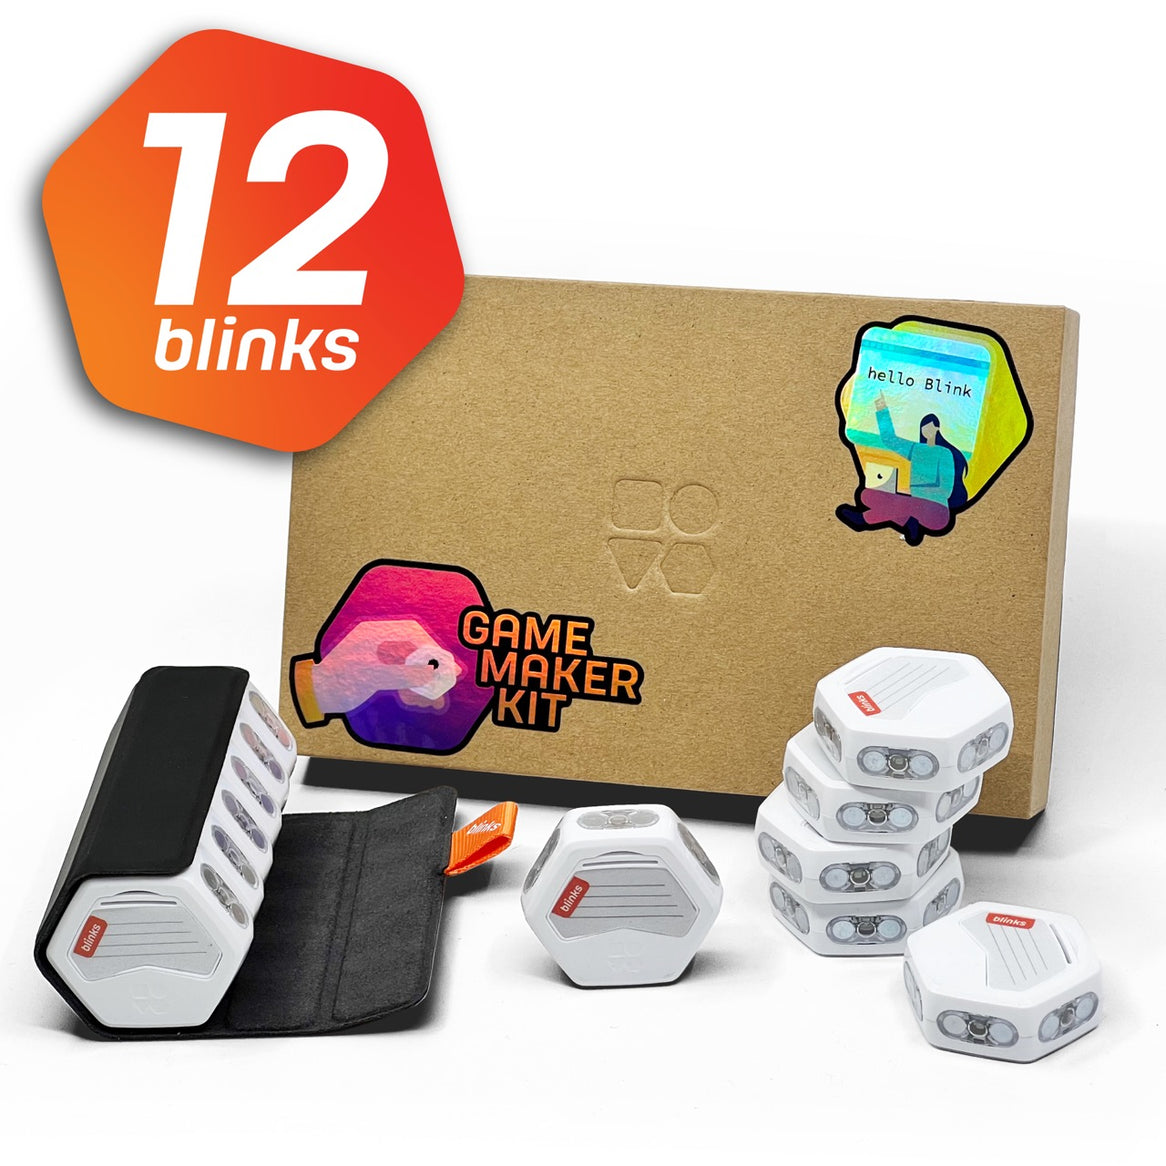 Game Maker's Bundle: 12 Blinks & Game Maker Kit